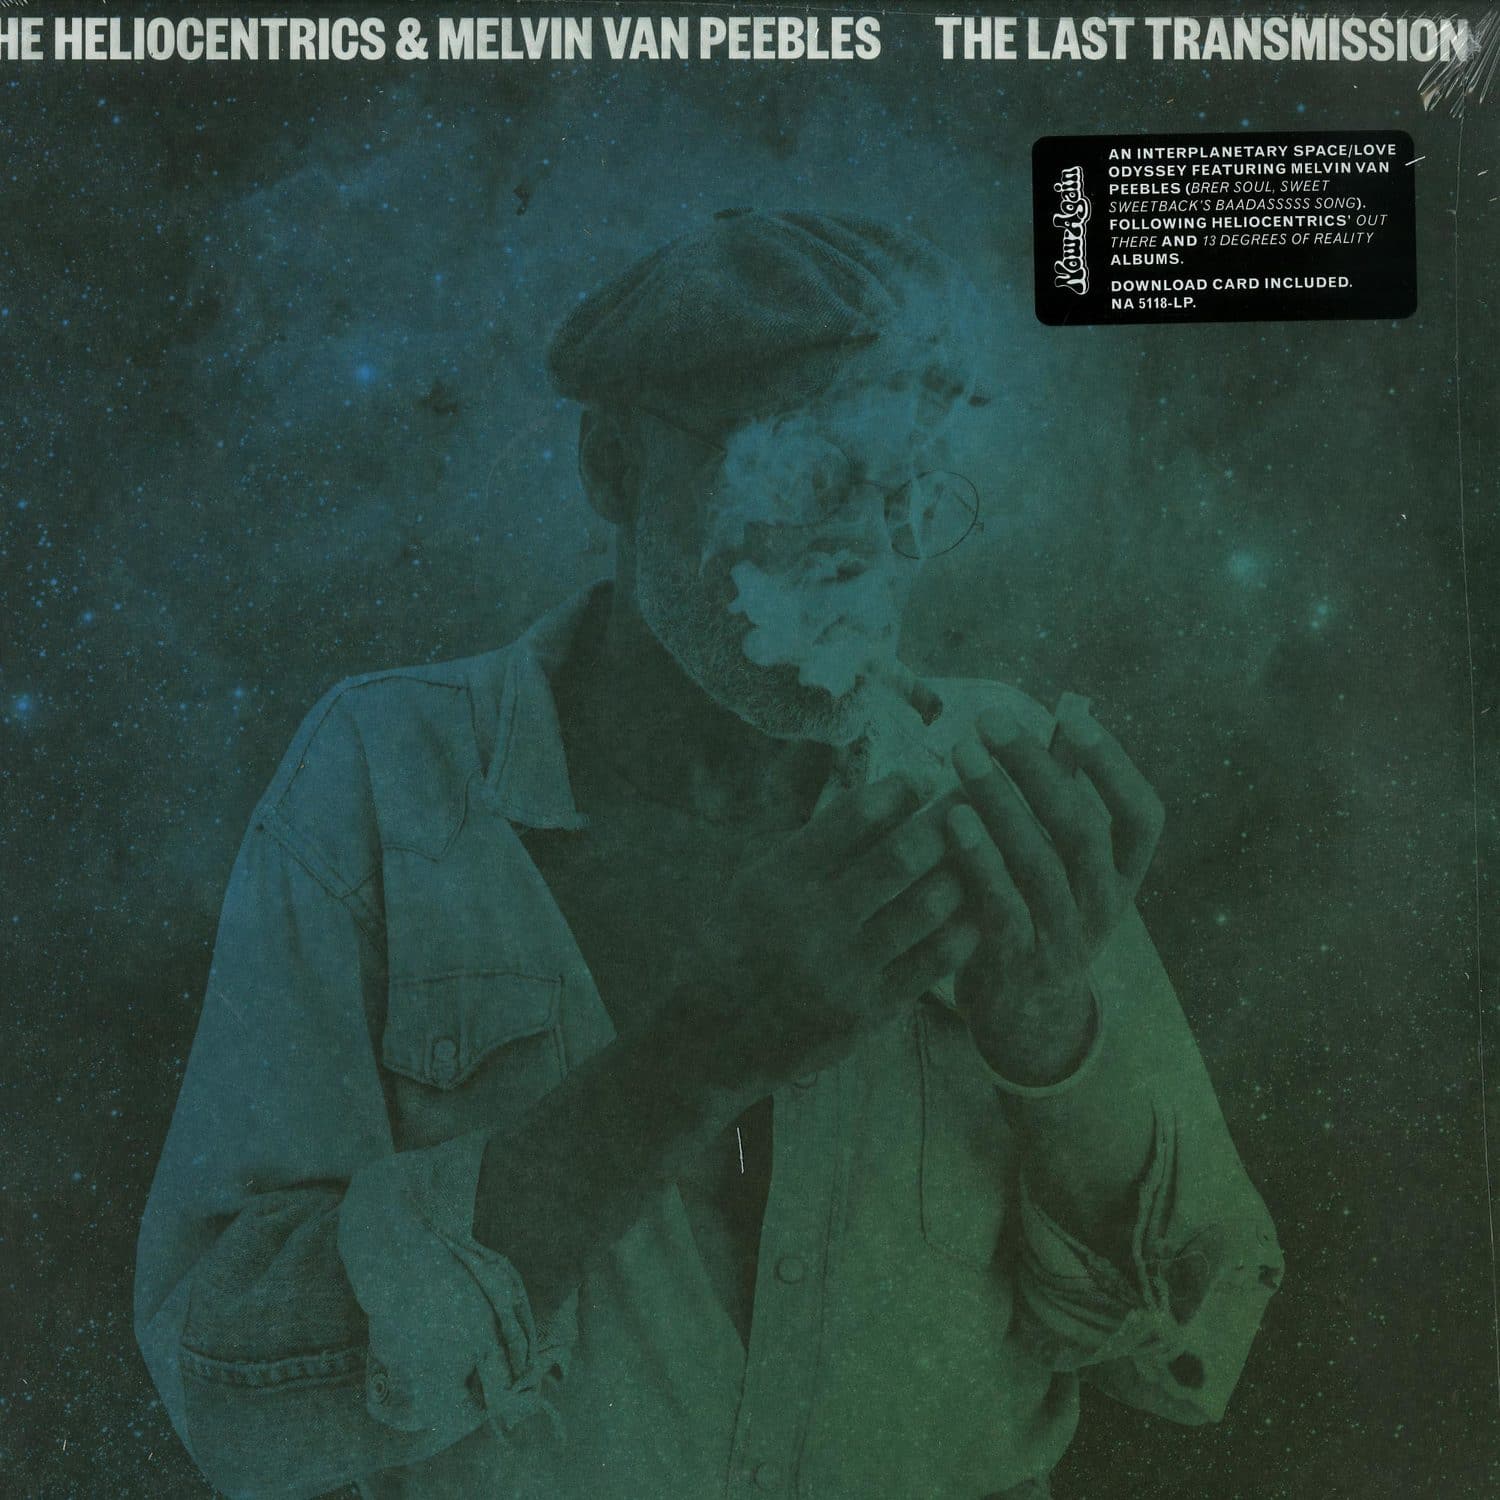 The Heliocentrics & Melvin Van Peebles - THE LAST TRANSMISSION 